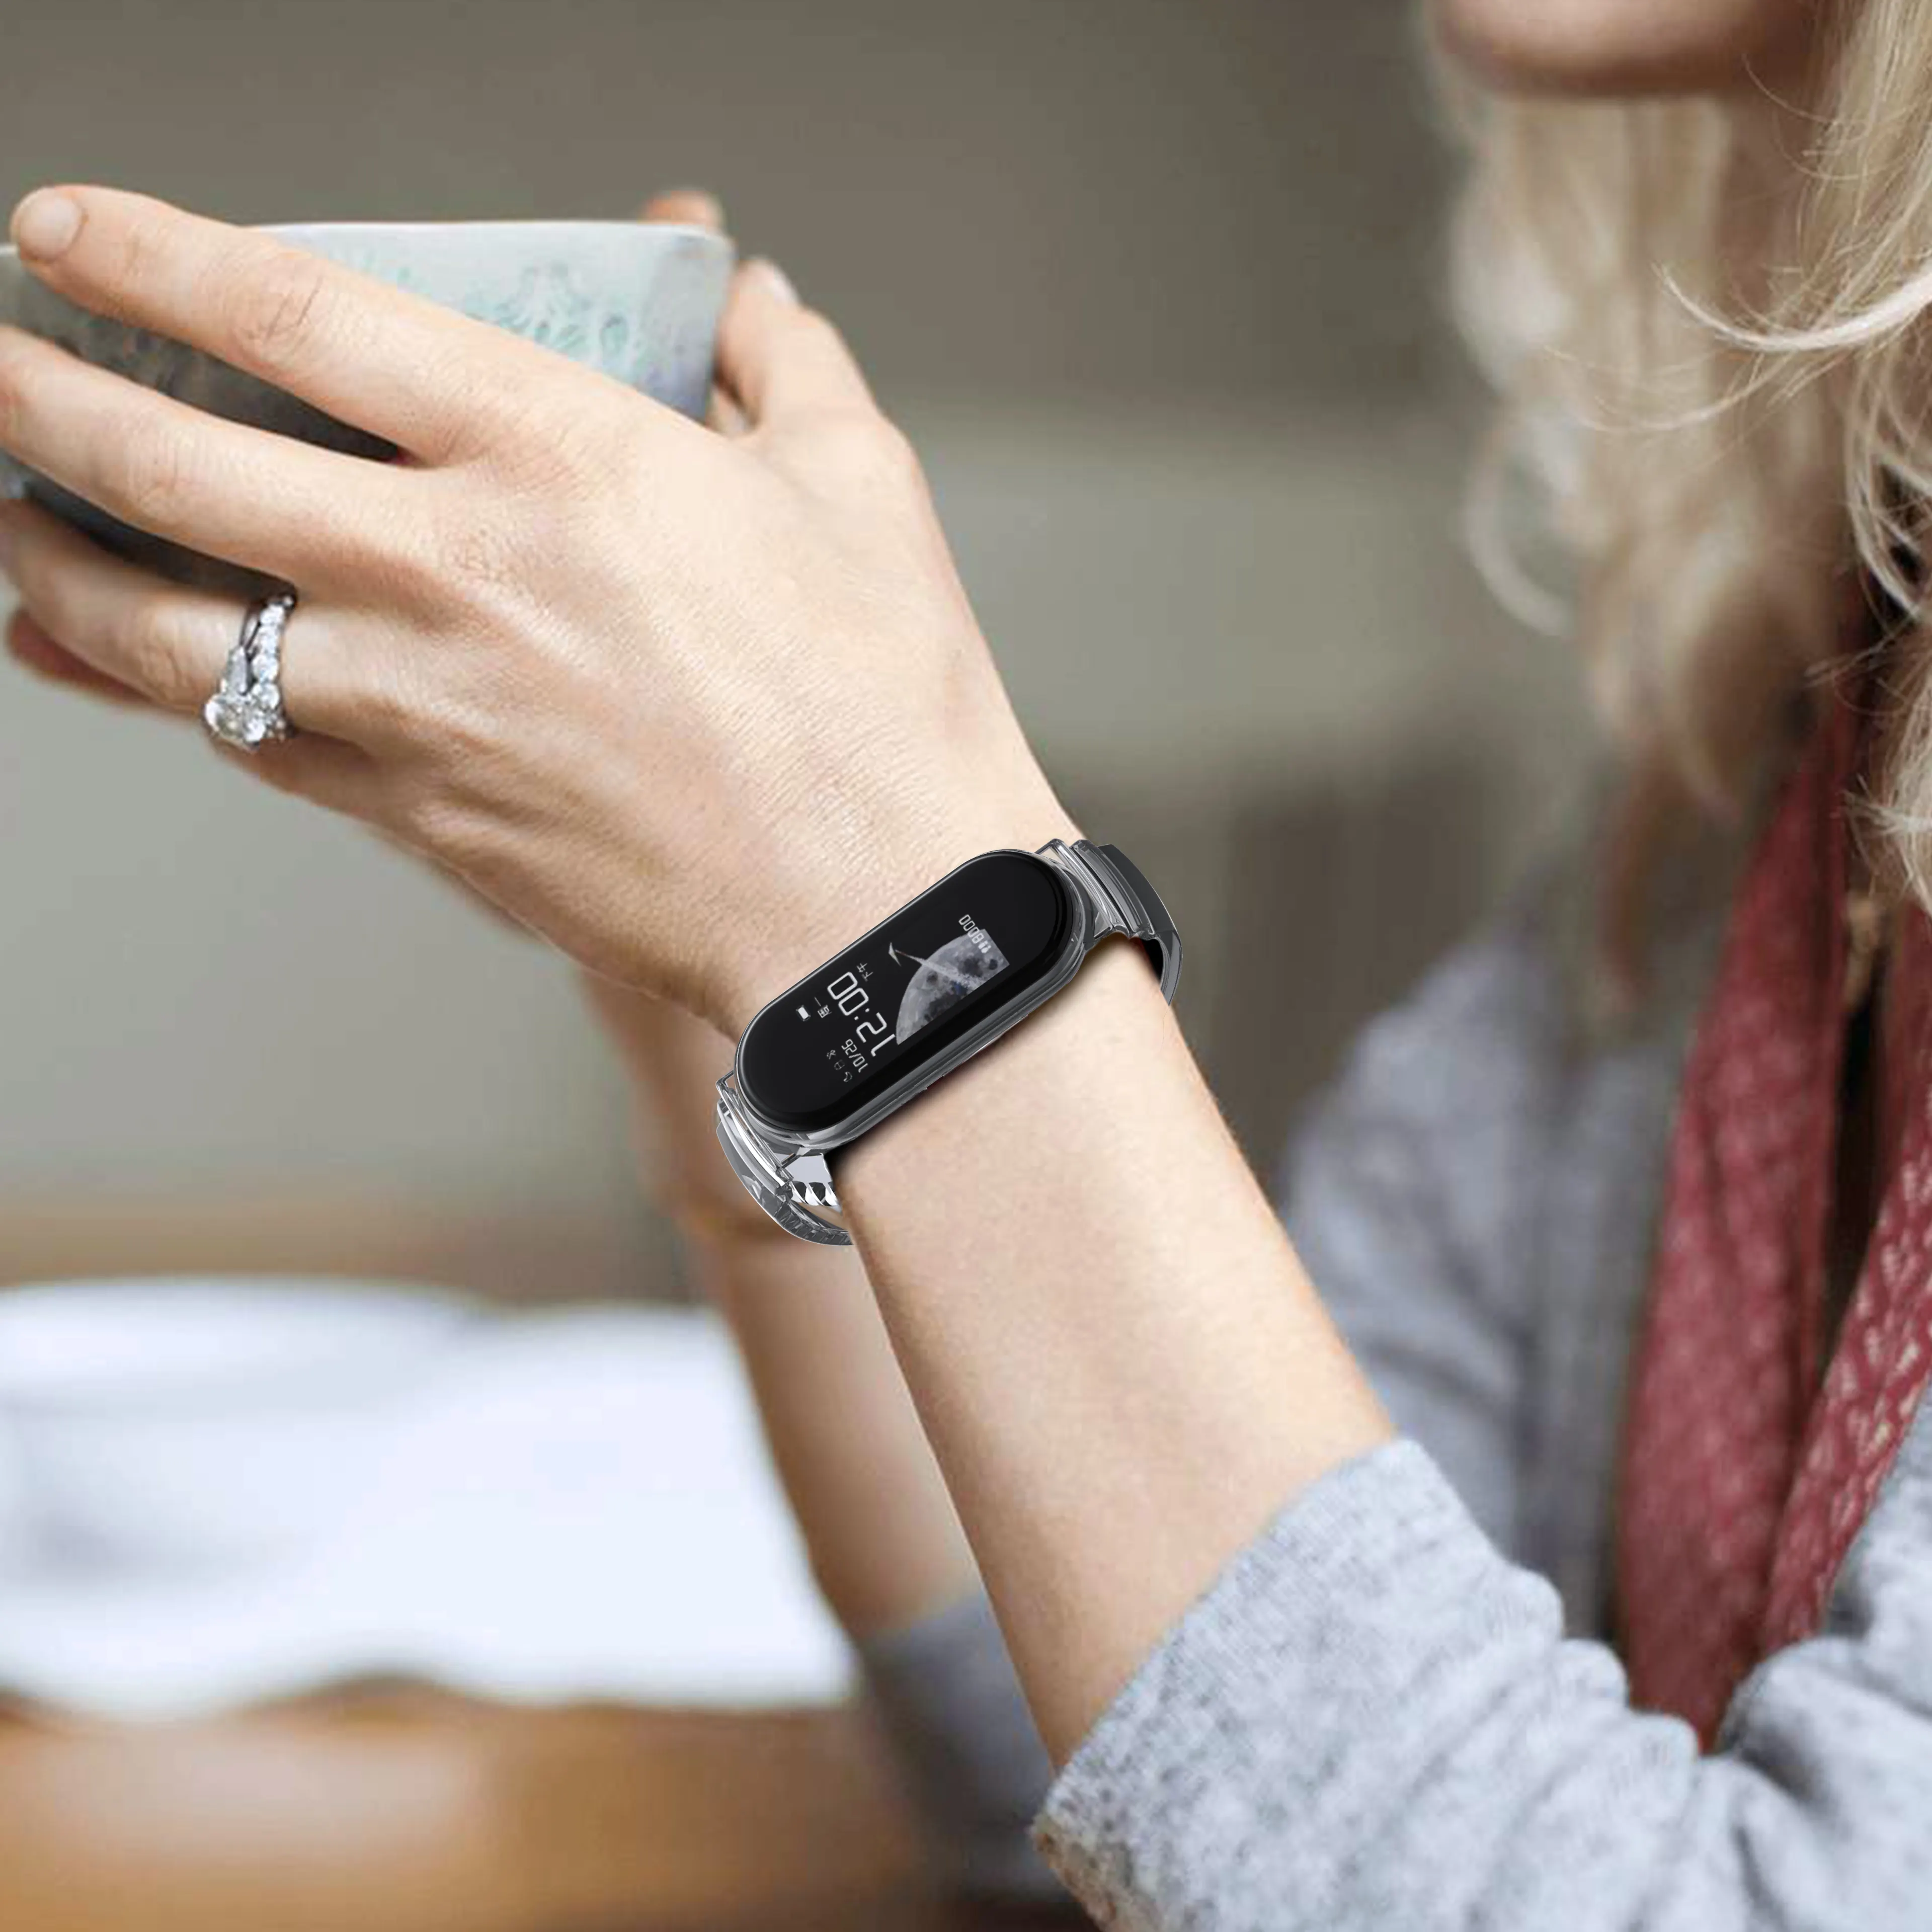 LeYi New Strap For Xiaomi Mi Band 1 2 3 4 5 Replacement Wristband Bracelet Watchband Watch Straps